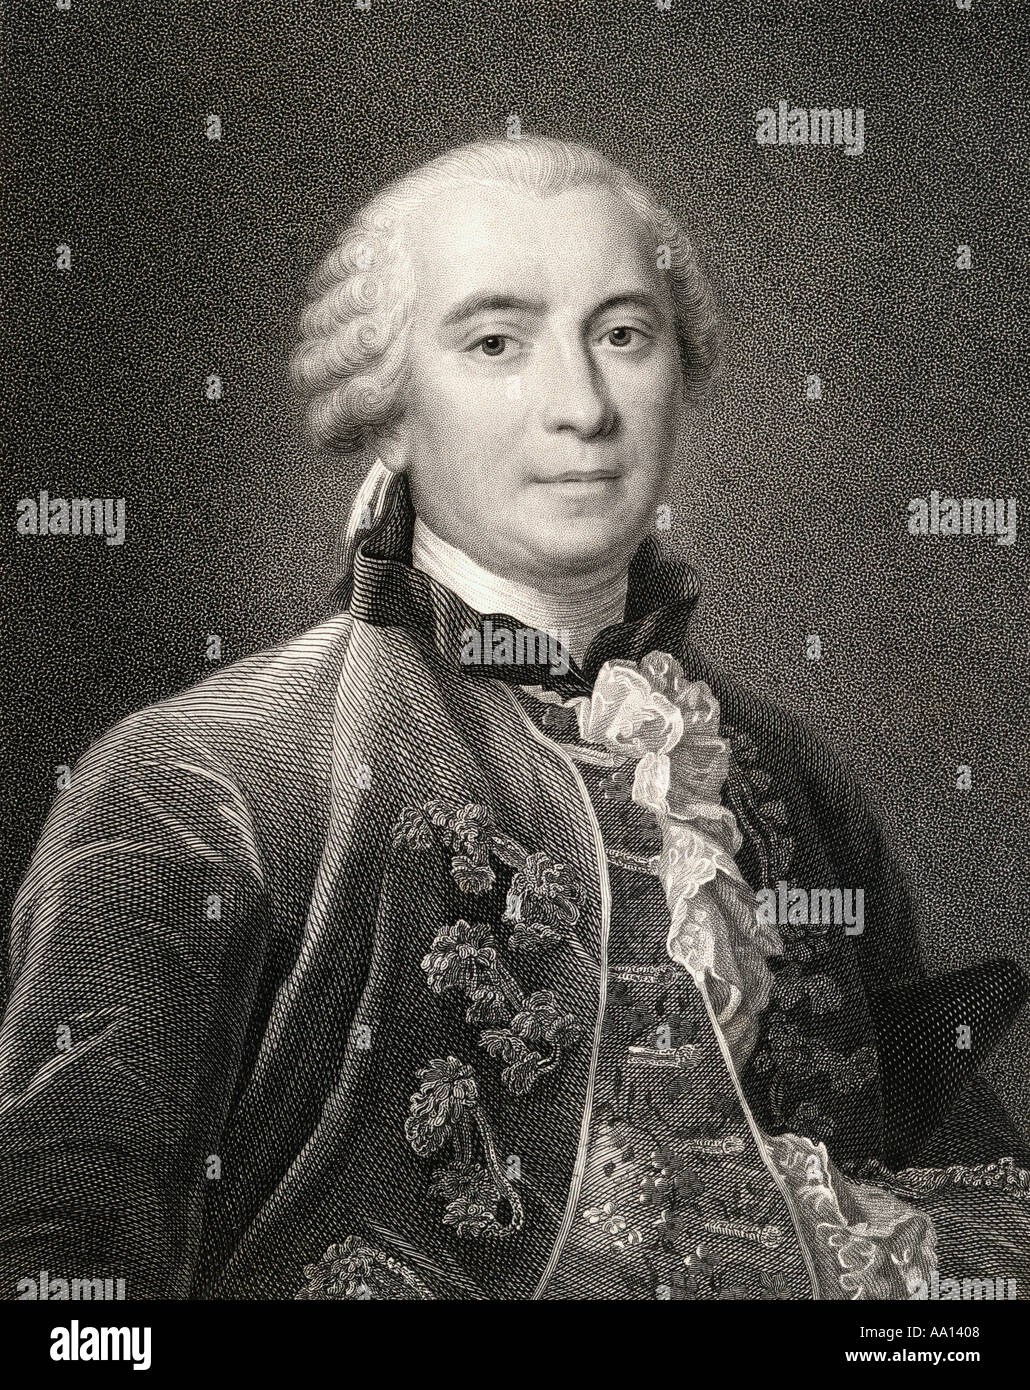 Georges-Louis Leclerc, Comte de Buffon,1707 - 1788. French naturalist, mathematician, cosmologist, and encyclopédiste. Stock Photo